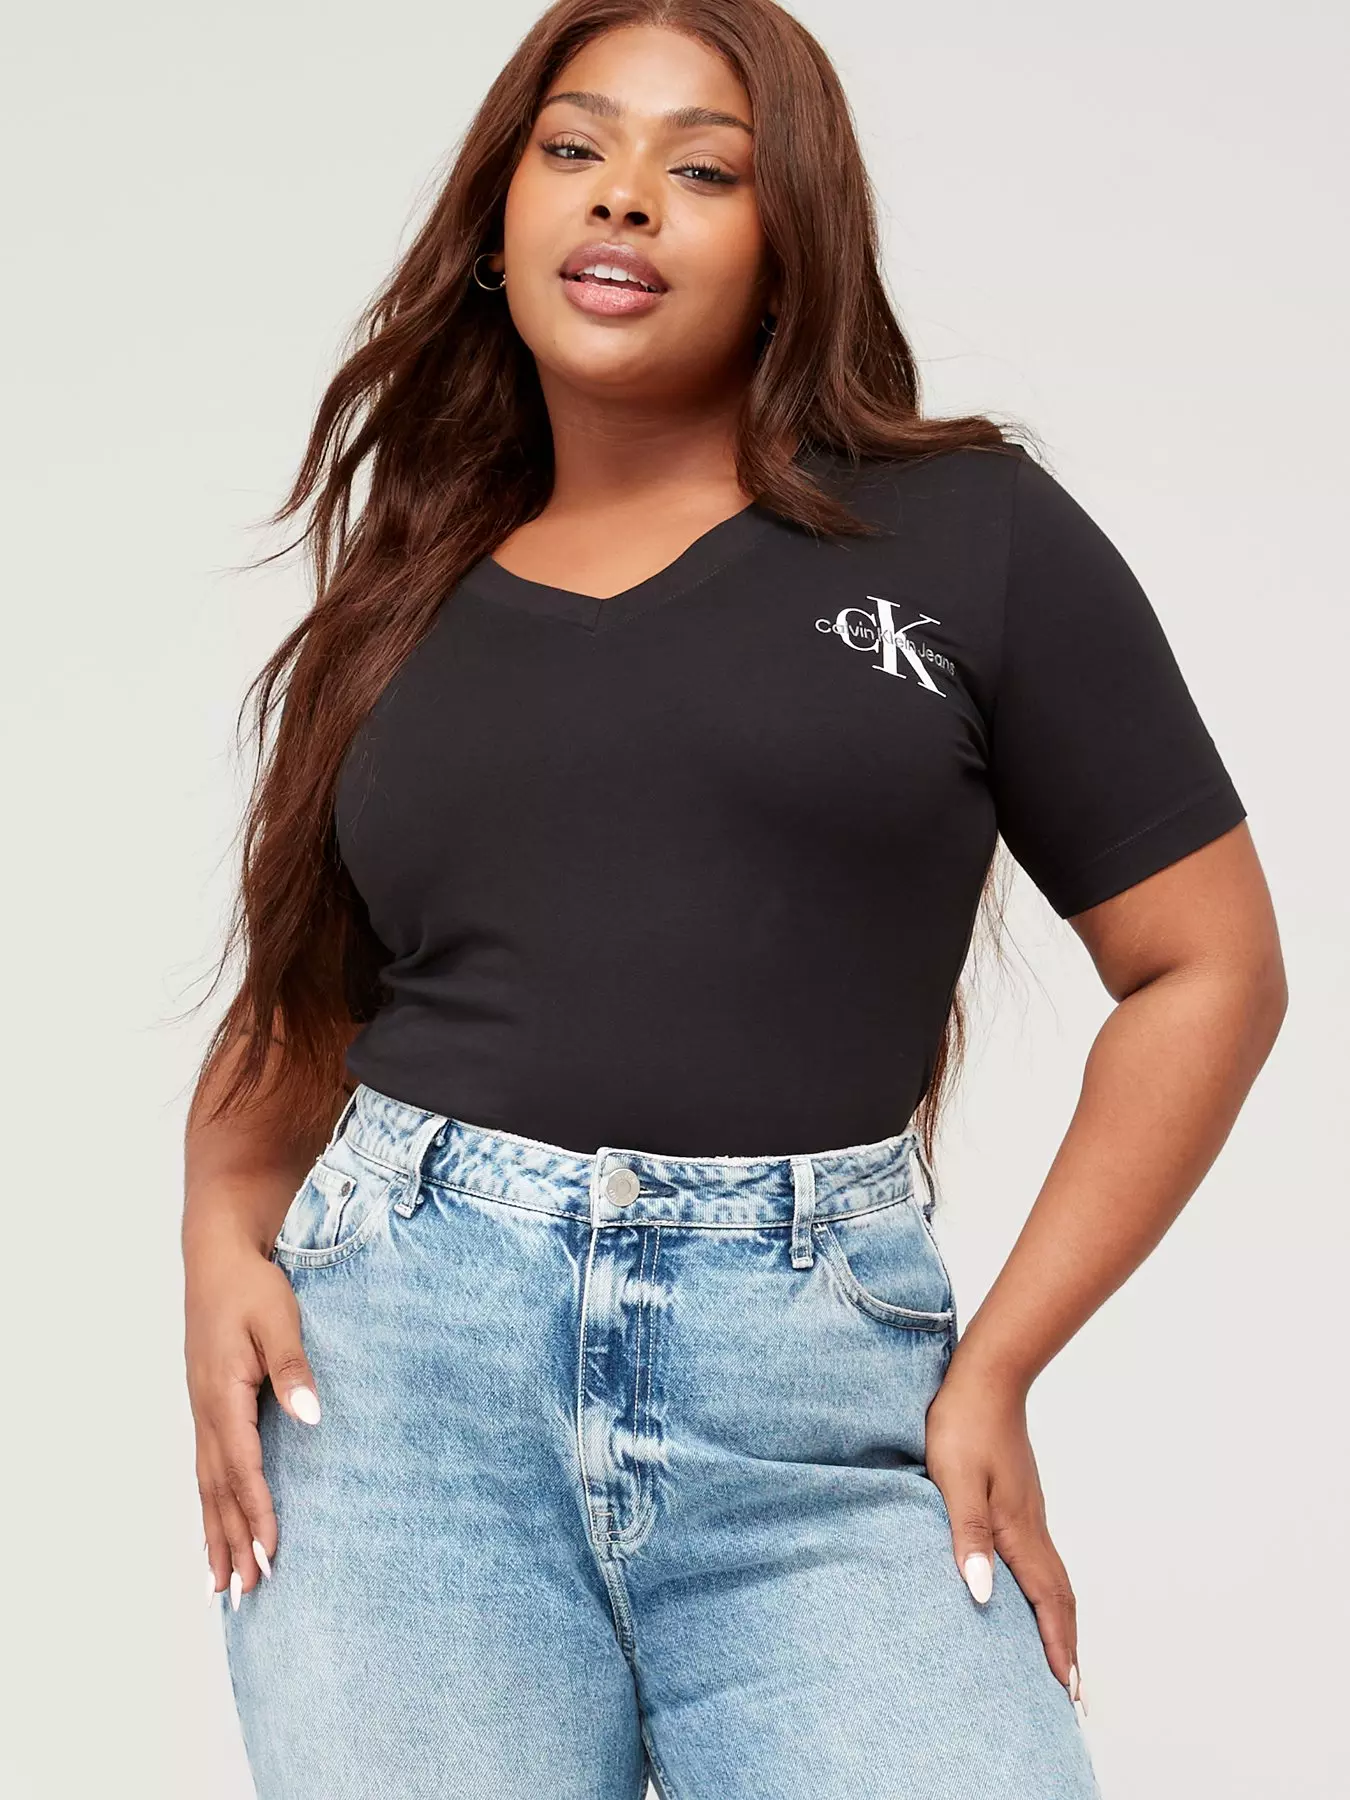 Calvin klein jeans Very Women | t-shirts Tops & | Ireland 